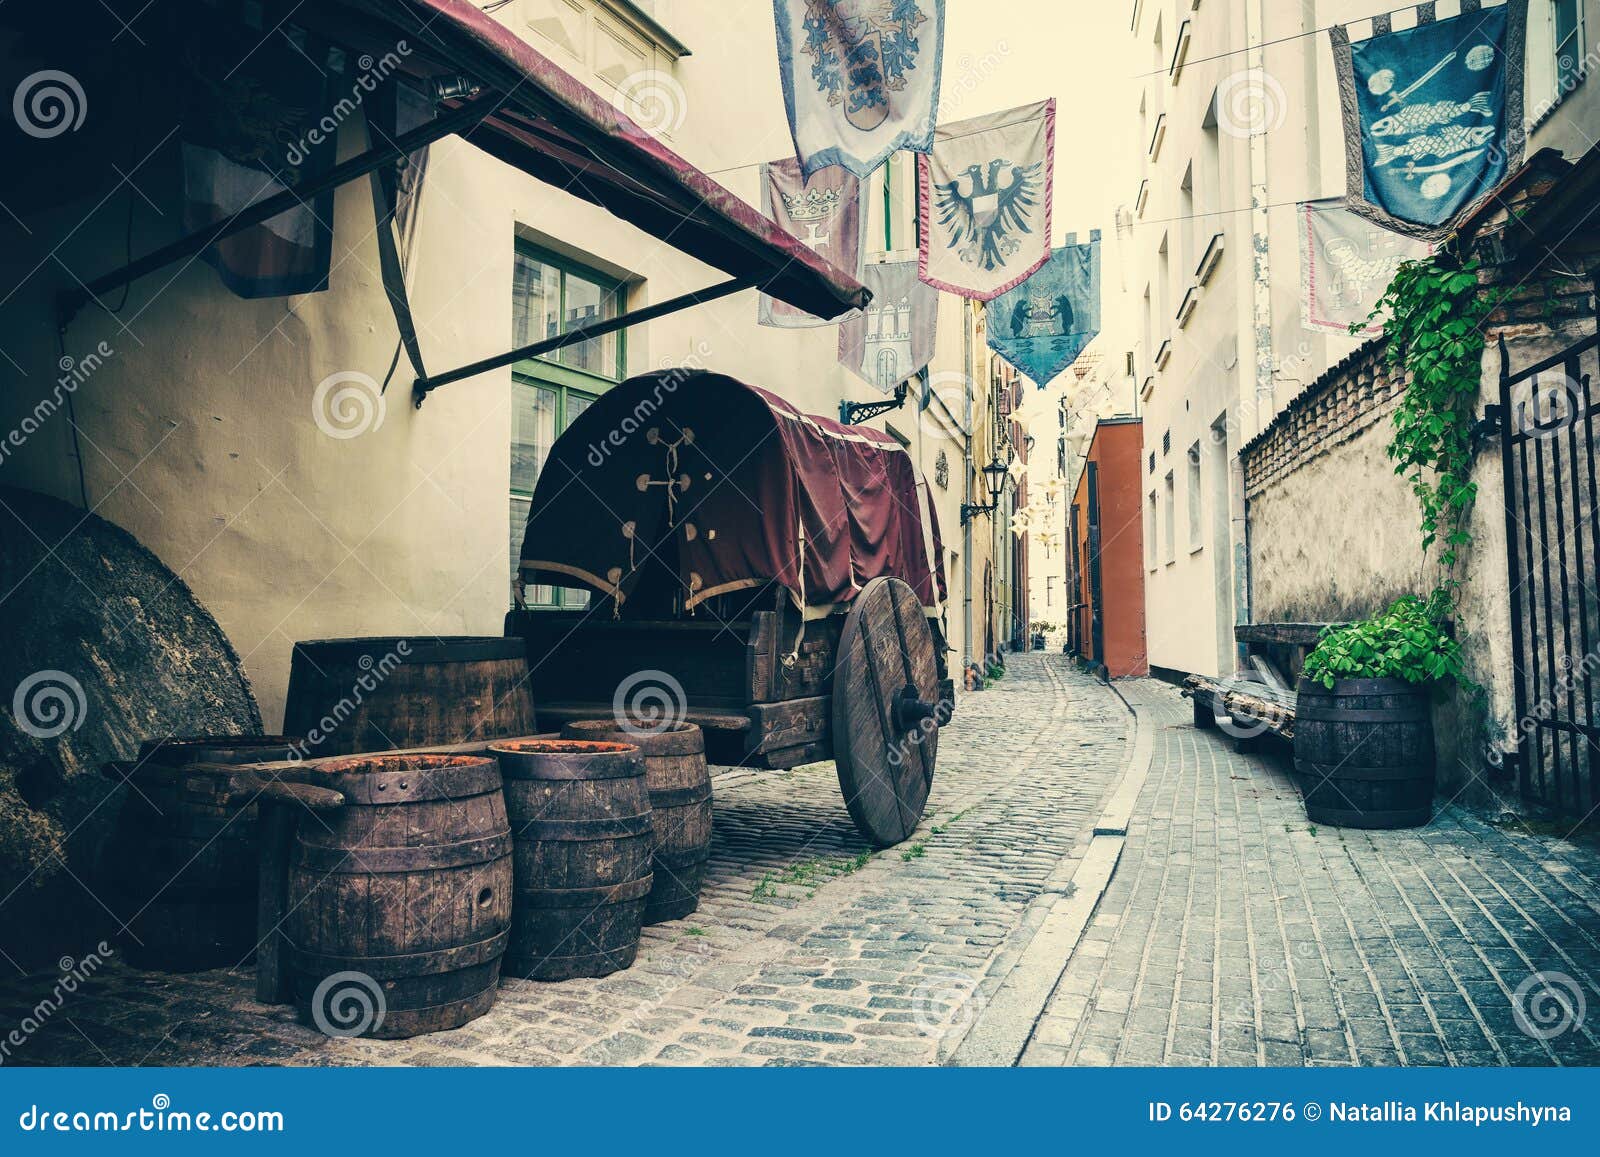 medieval street in riga, latvia